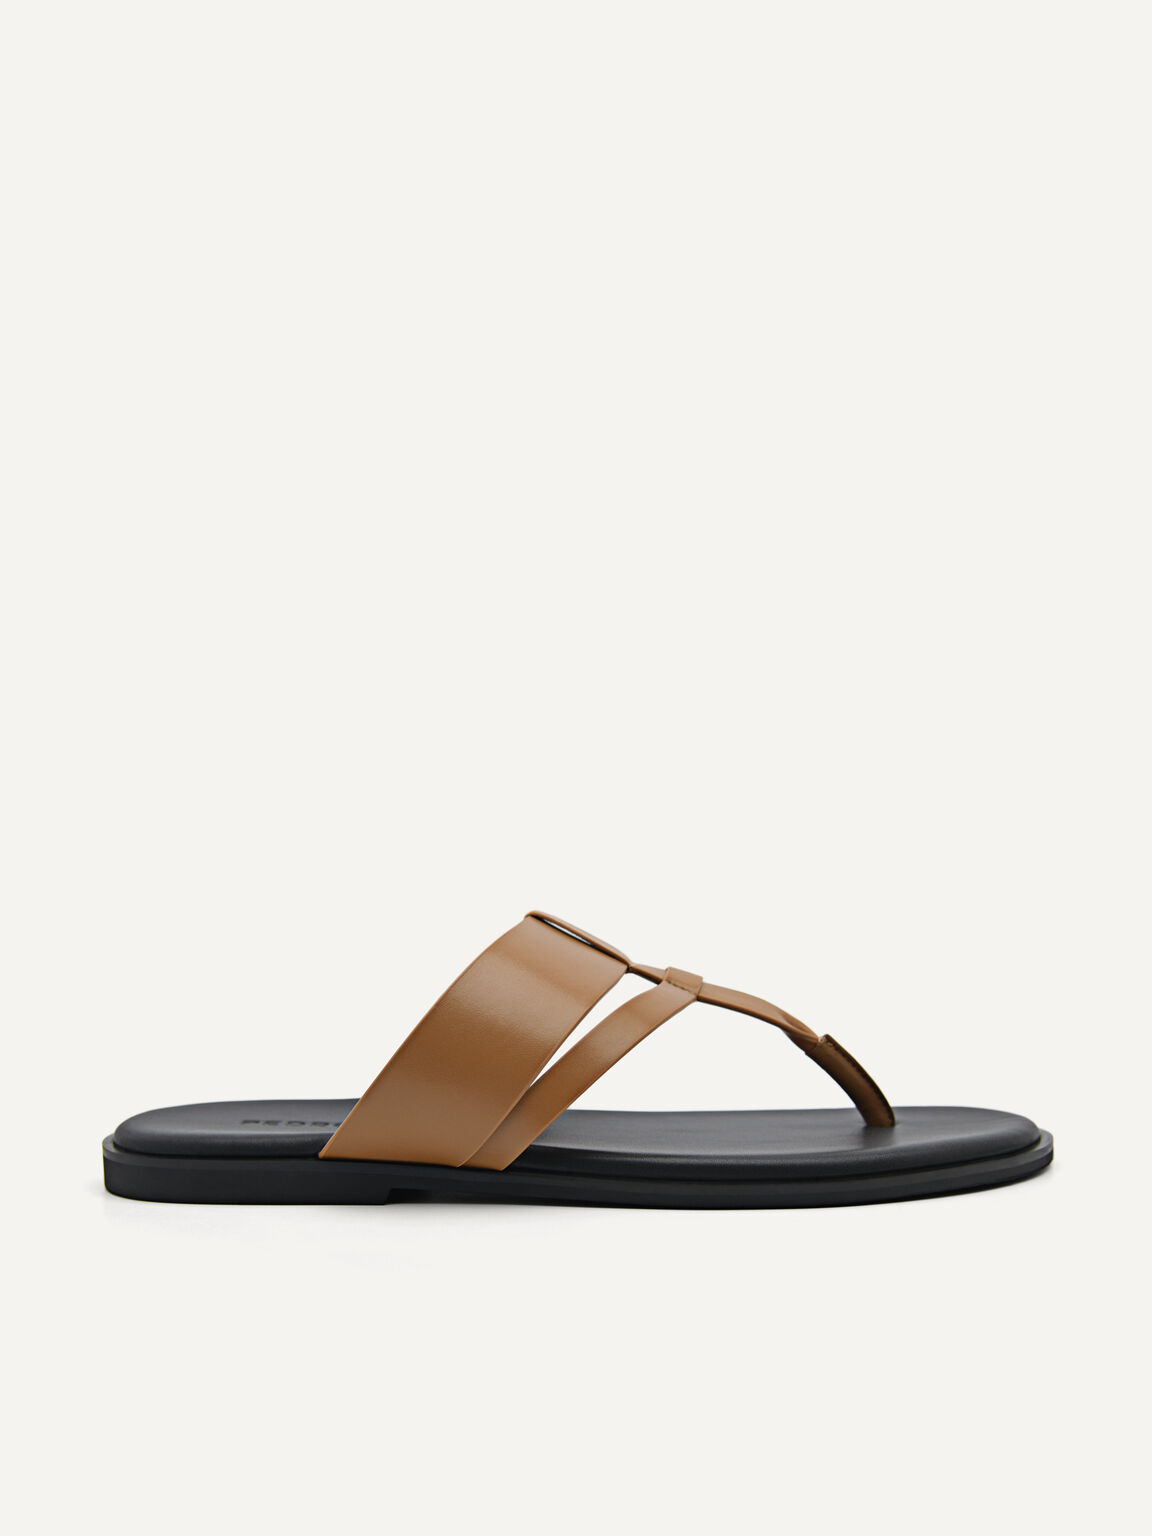 Grid Thong Sandals, Brown